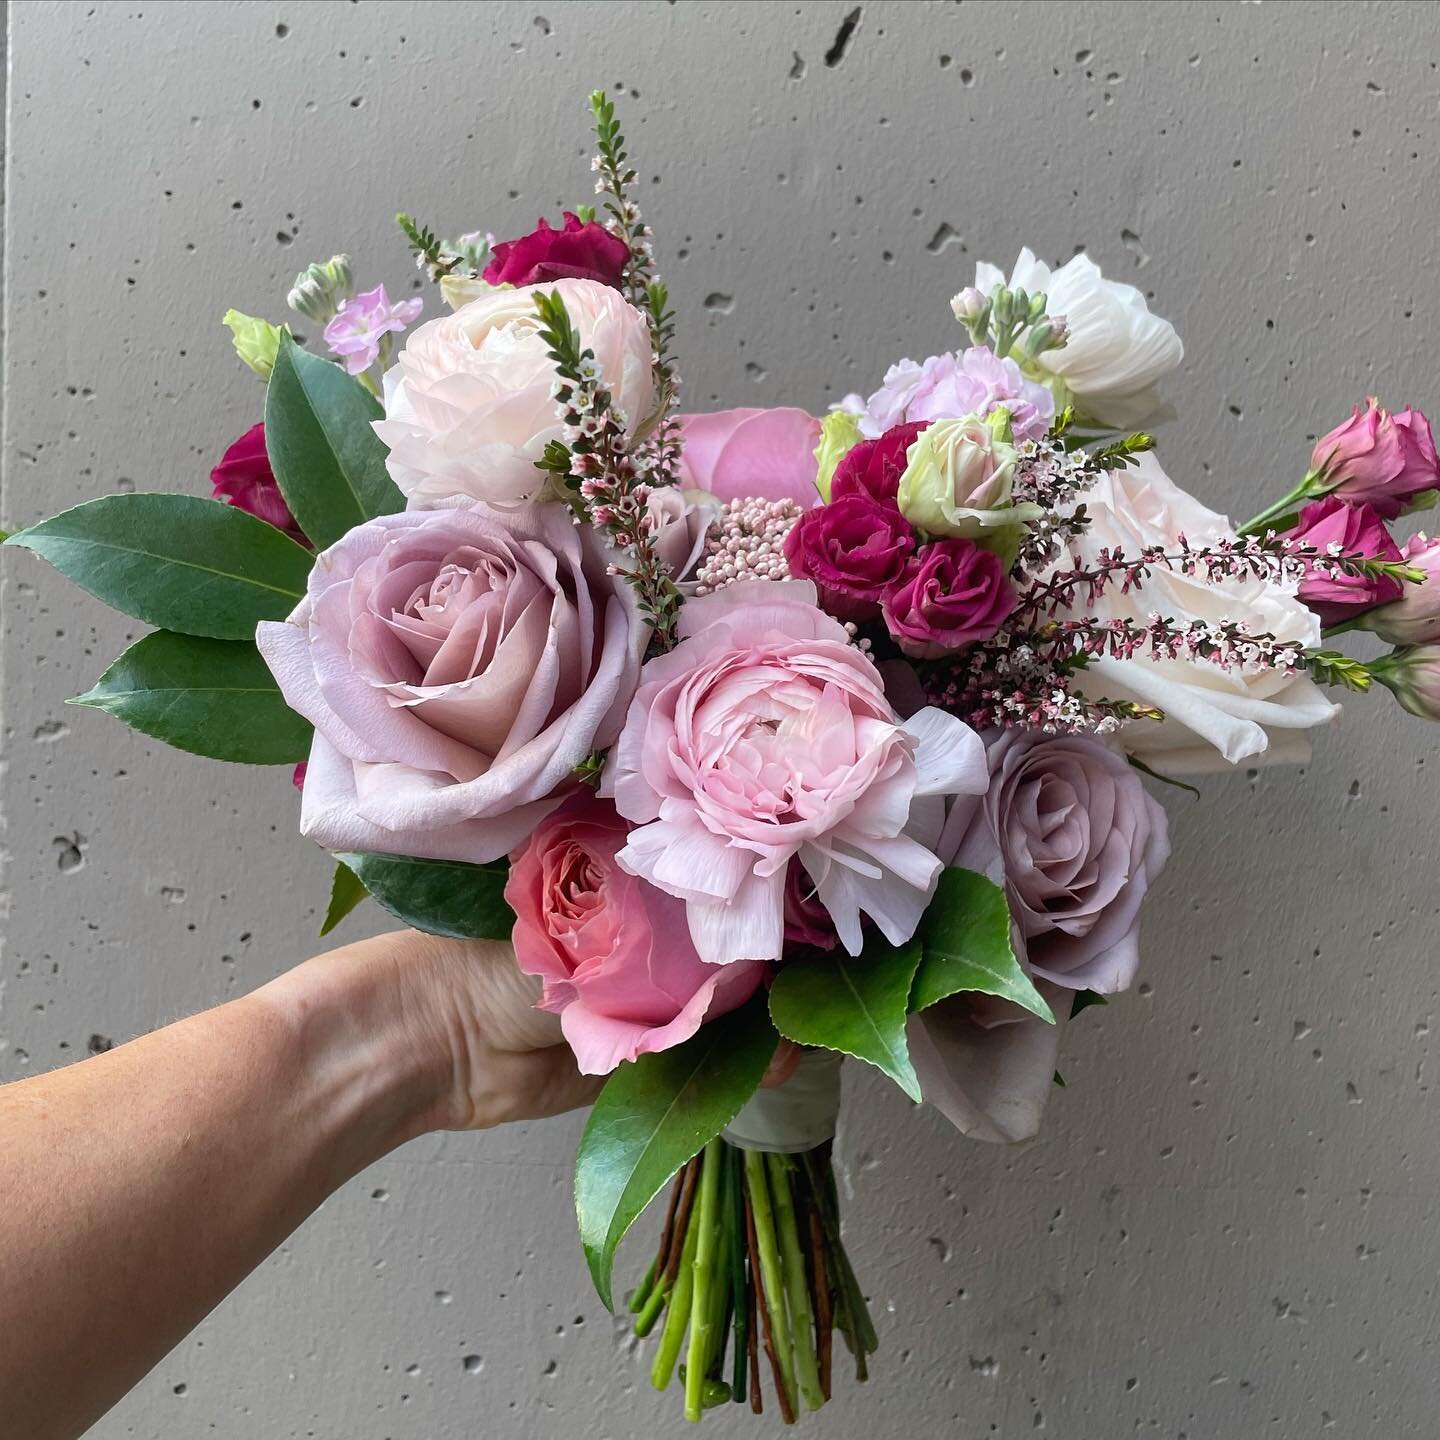 This bouquet 💓💗Full of florals with very minimal greens..LOVE!
&bull;
&bull;
#blush #pink #bouquet #bride #banffflowers #banffflorist #flowerbouquet #banffwedding #banffweddingflorist #pinkbouquet #septemberwedding #modernflorals #floral #floraldes